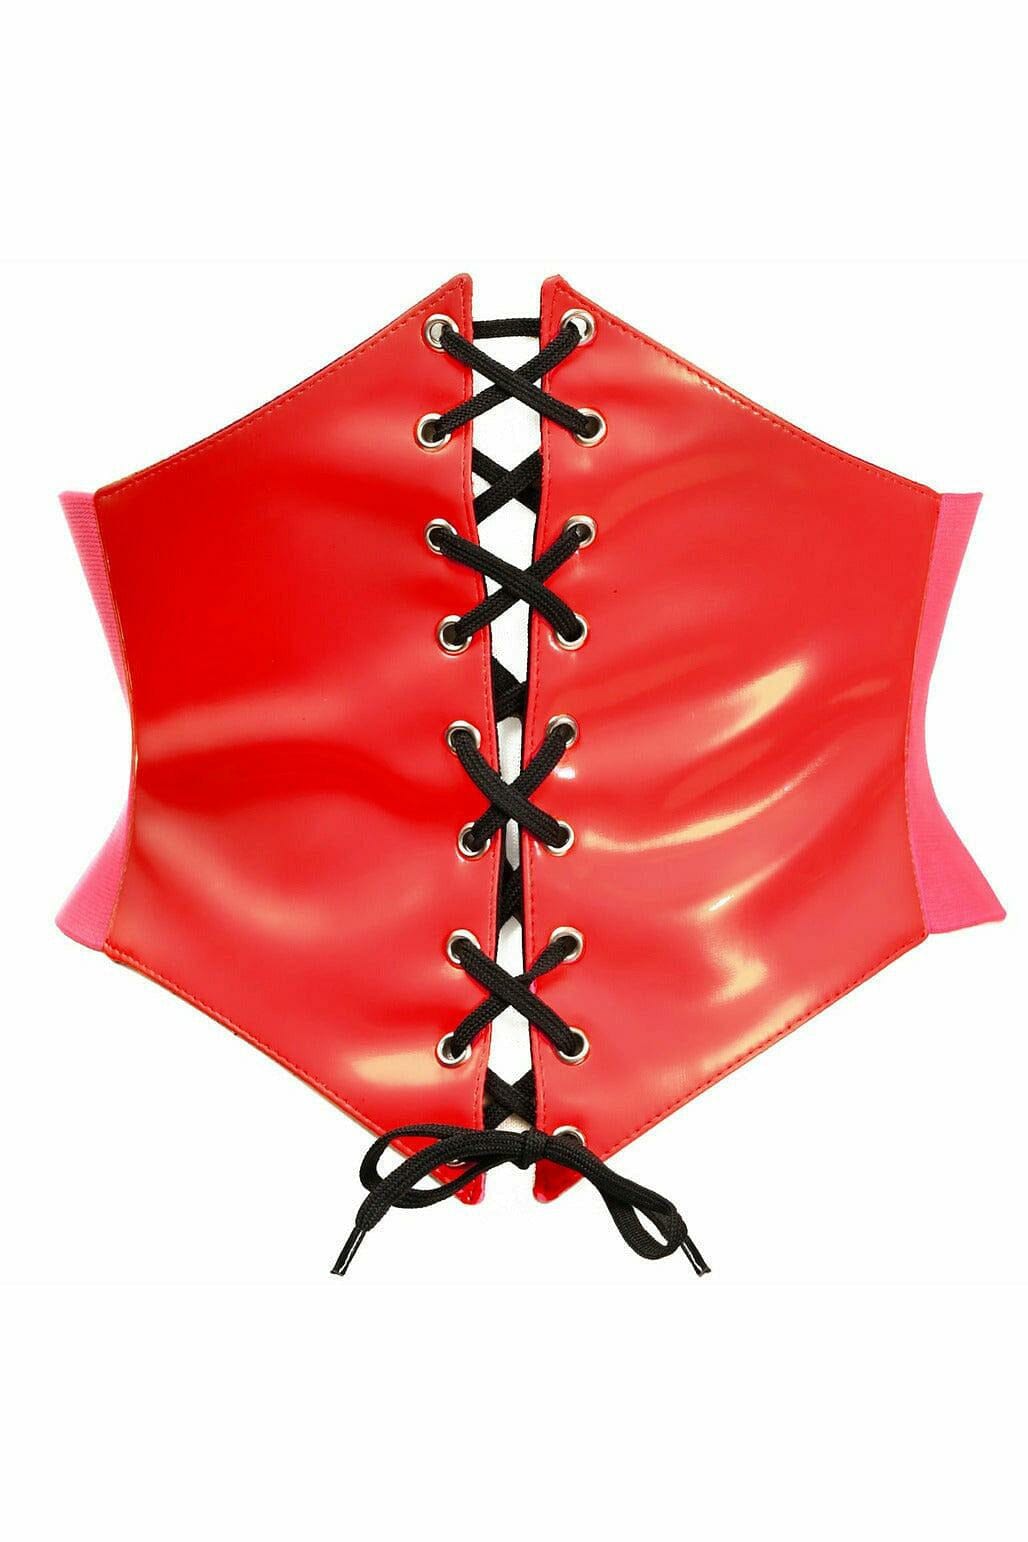 Lavish Red Patent Corset Belt Cincher-Corset Belts-Daisy Corsets-Red-S-SEXYSHOES.COM